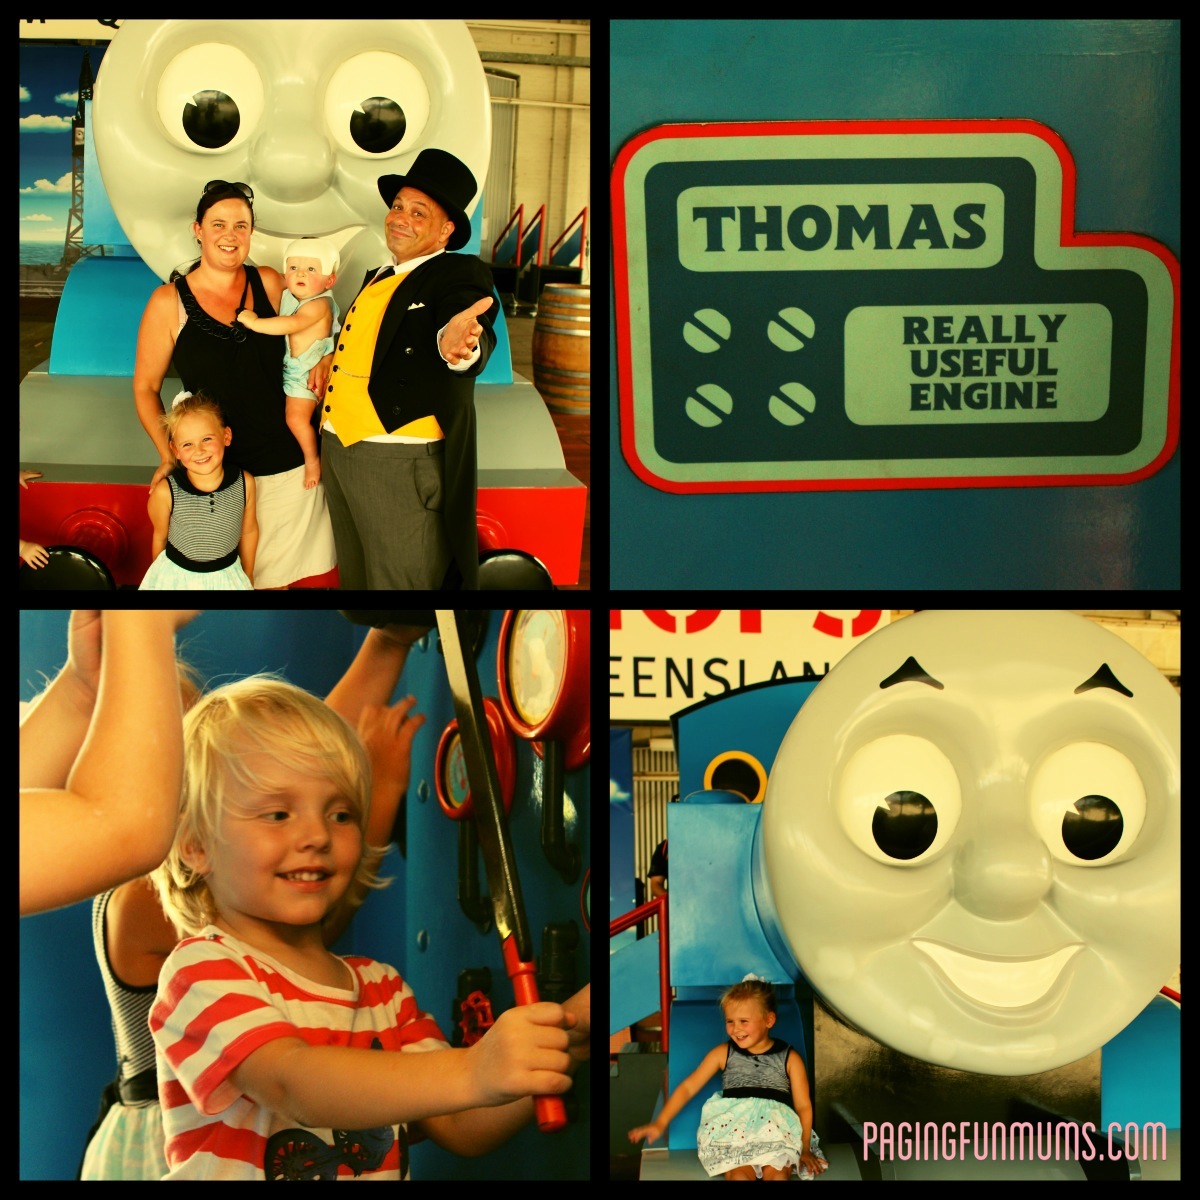 Who doesn't love Thomas?